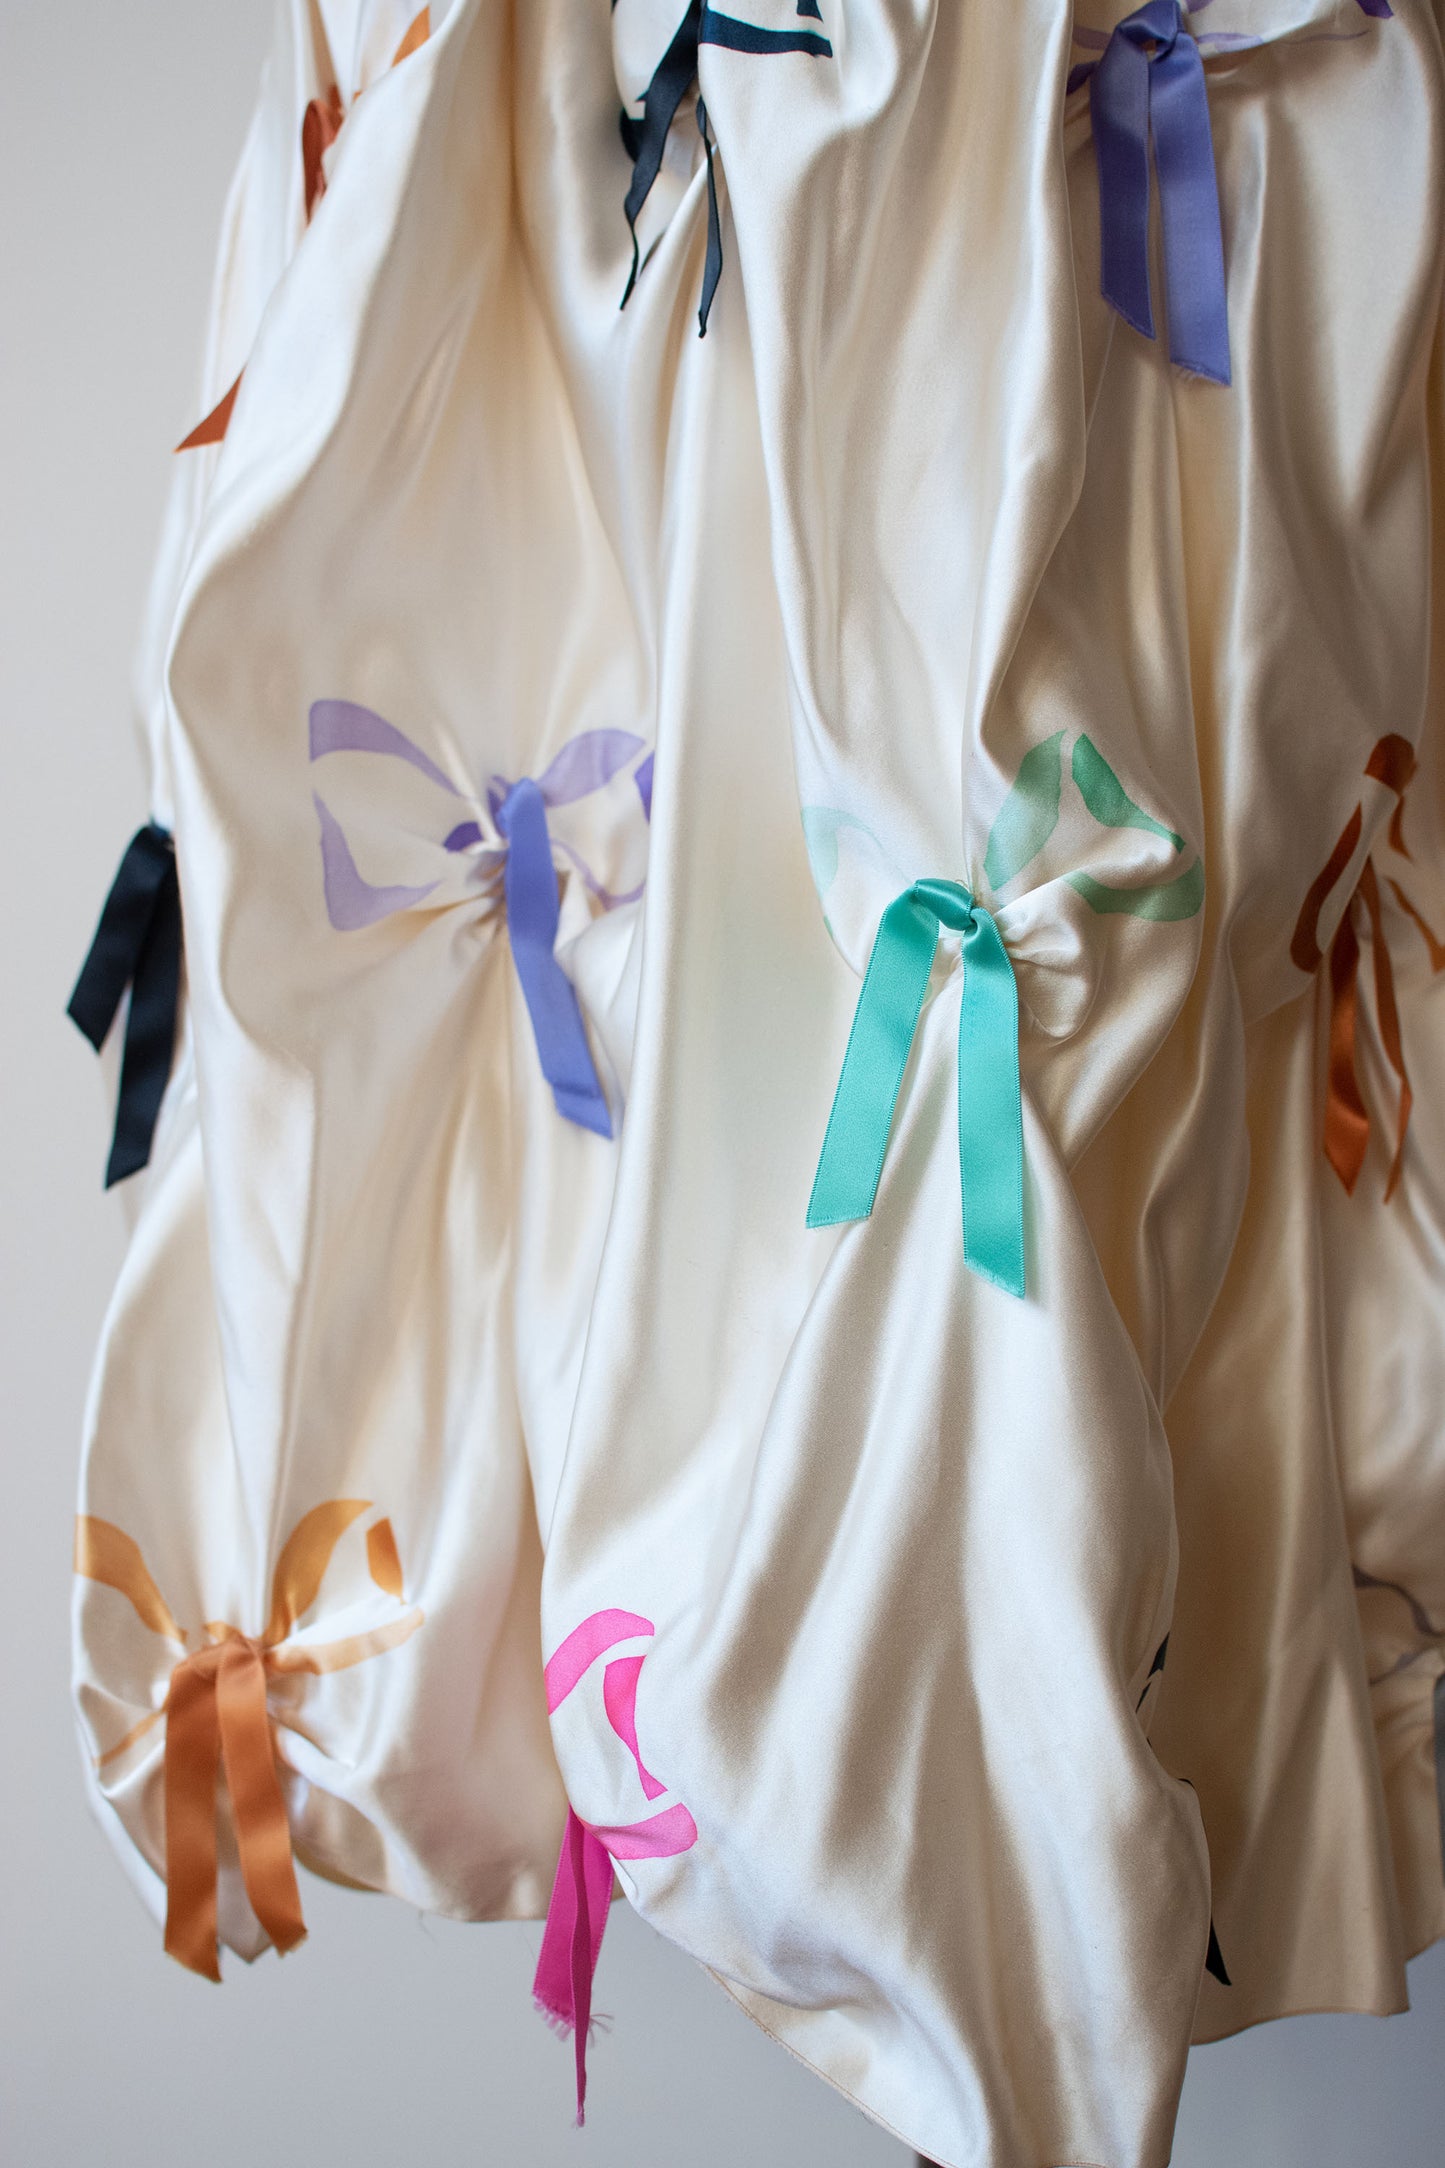 1990s Silk Dress | Sander Witlin